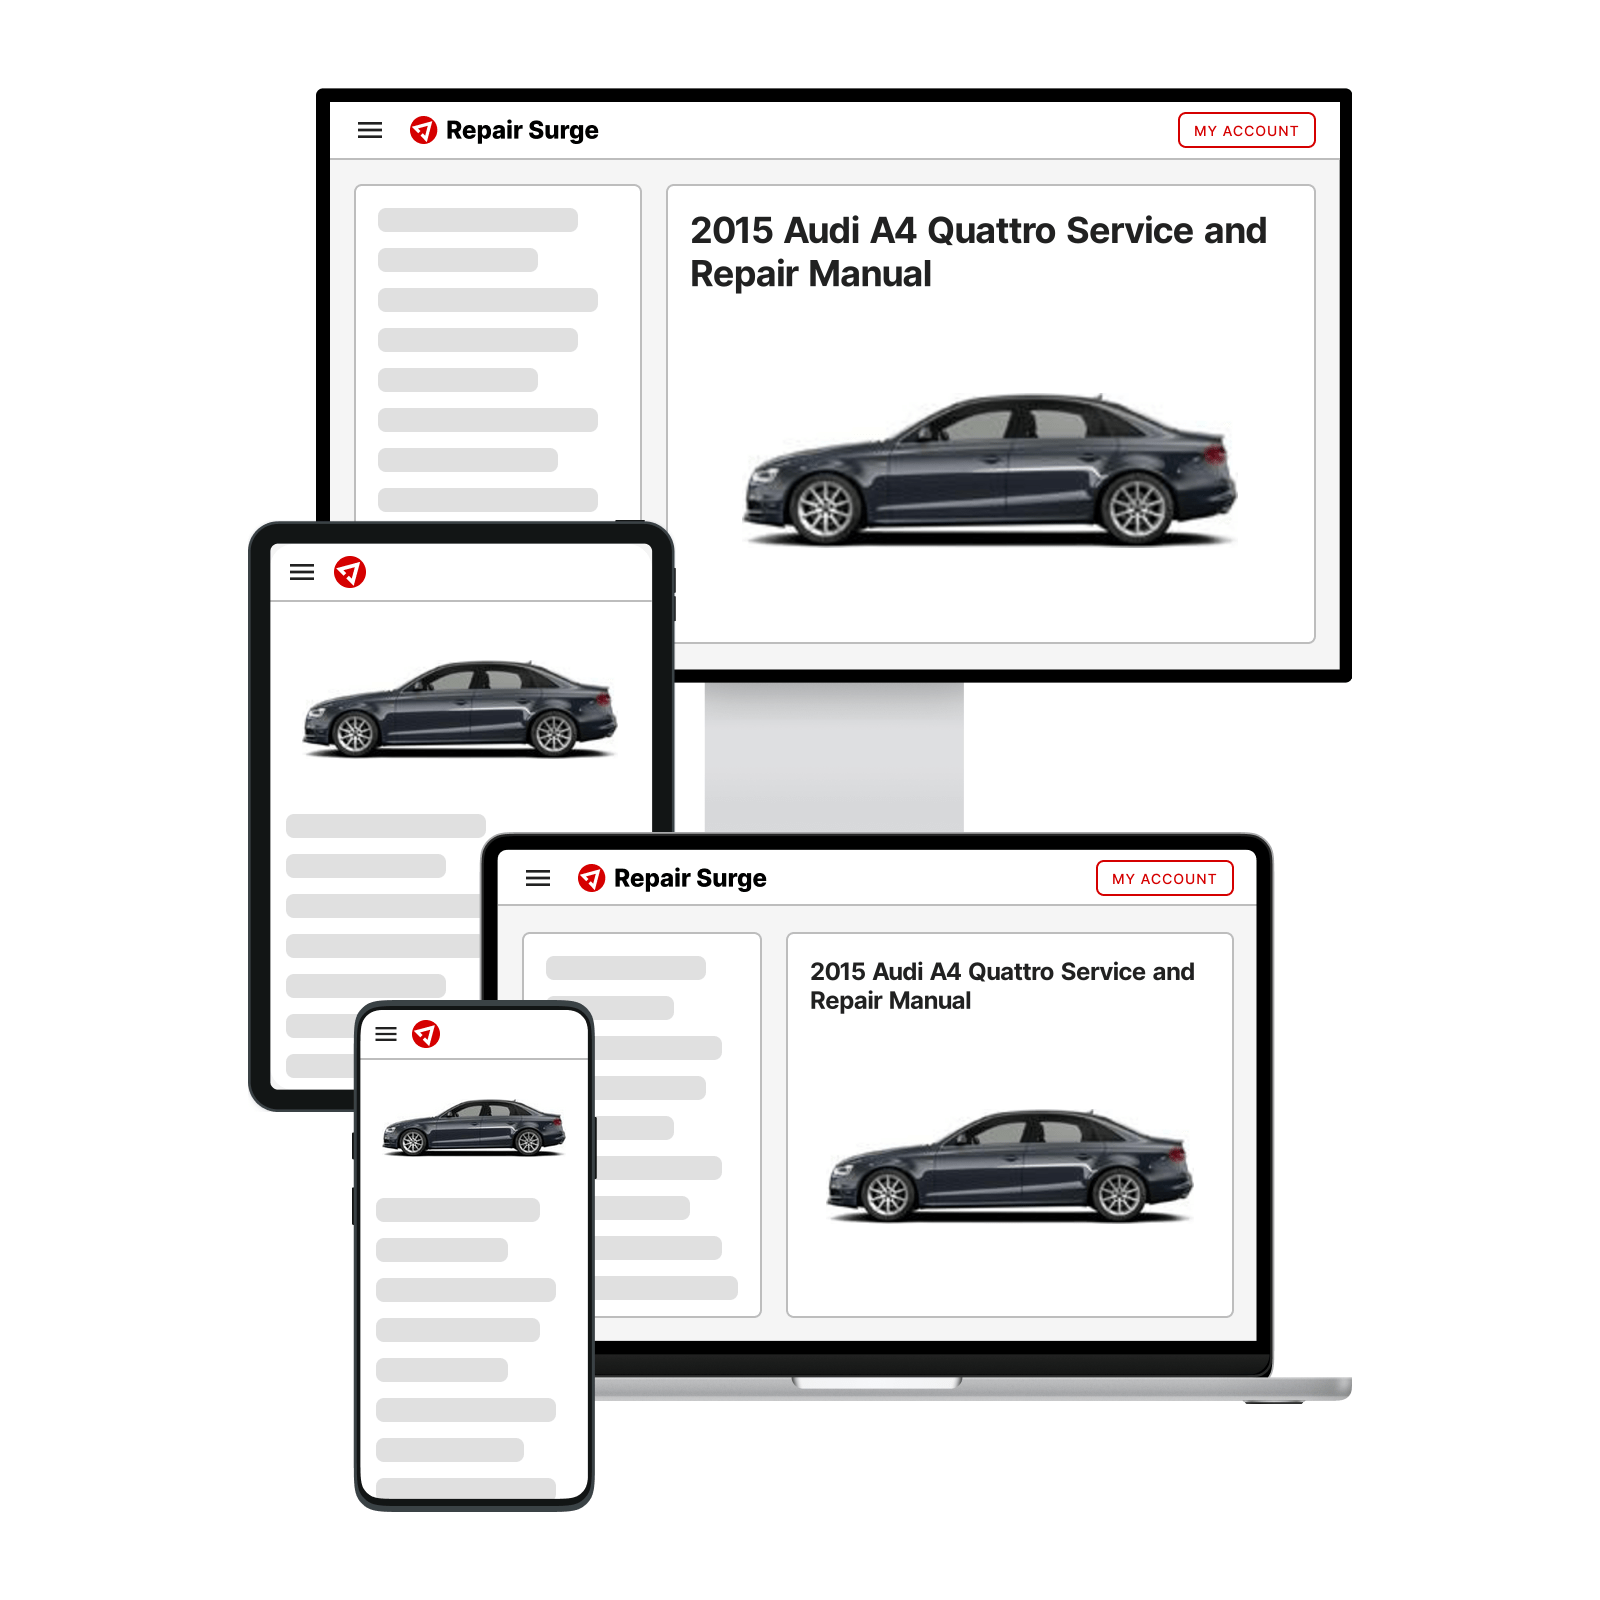 2015 Audi A4 Quattro service and repair manual hero image